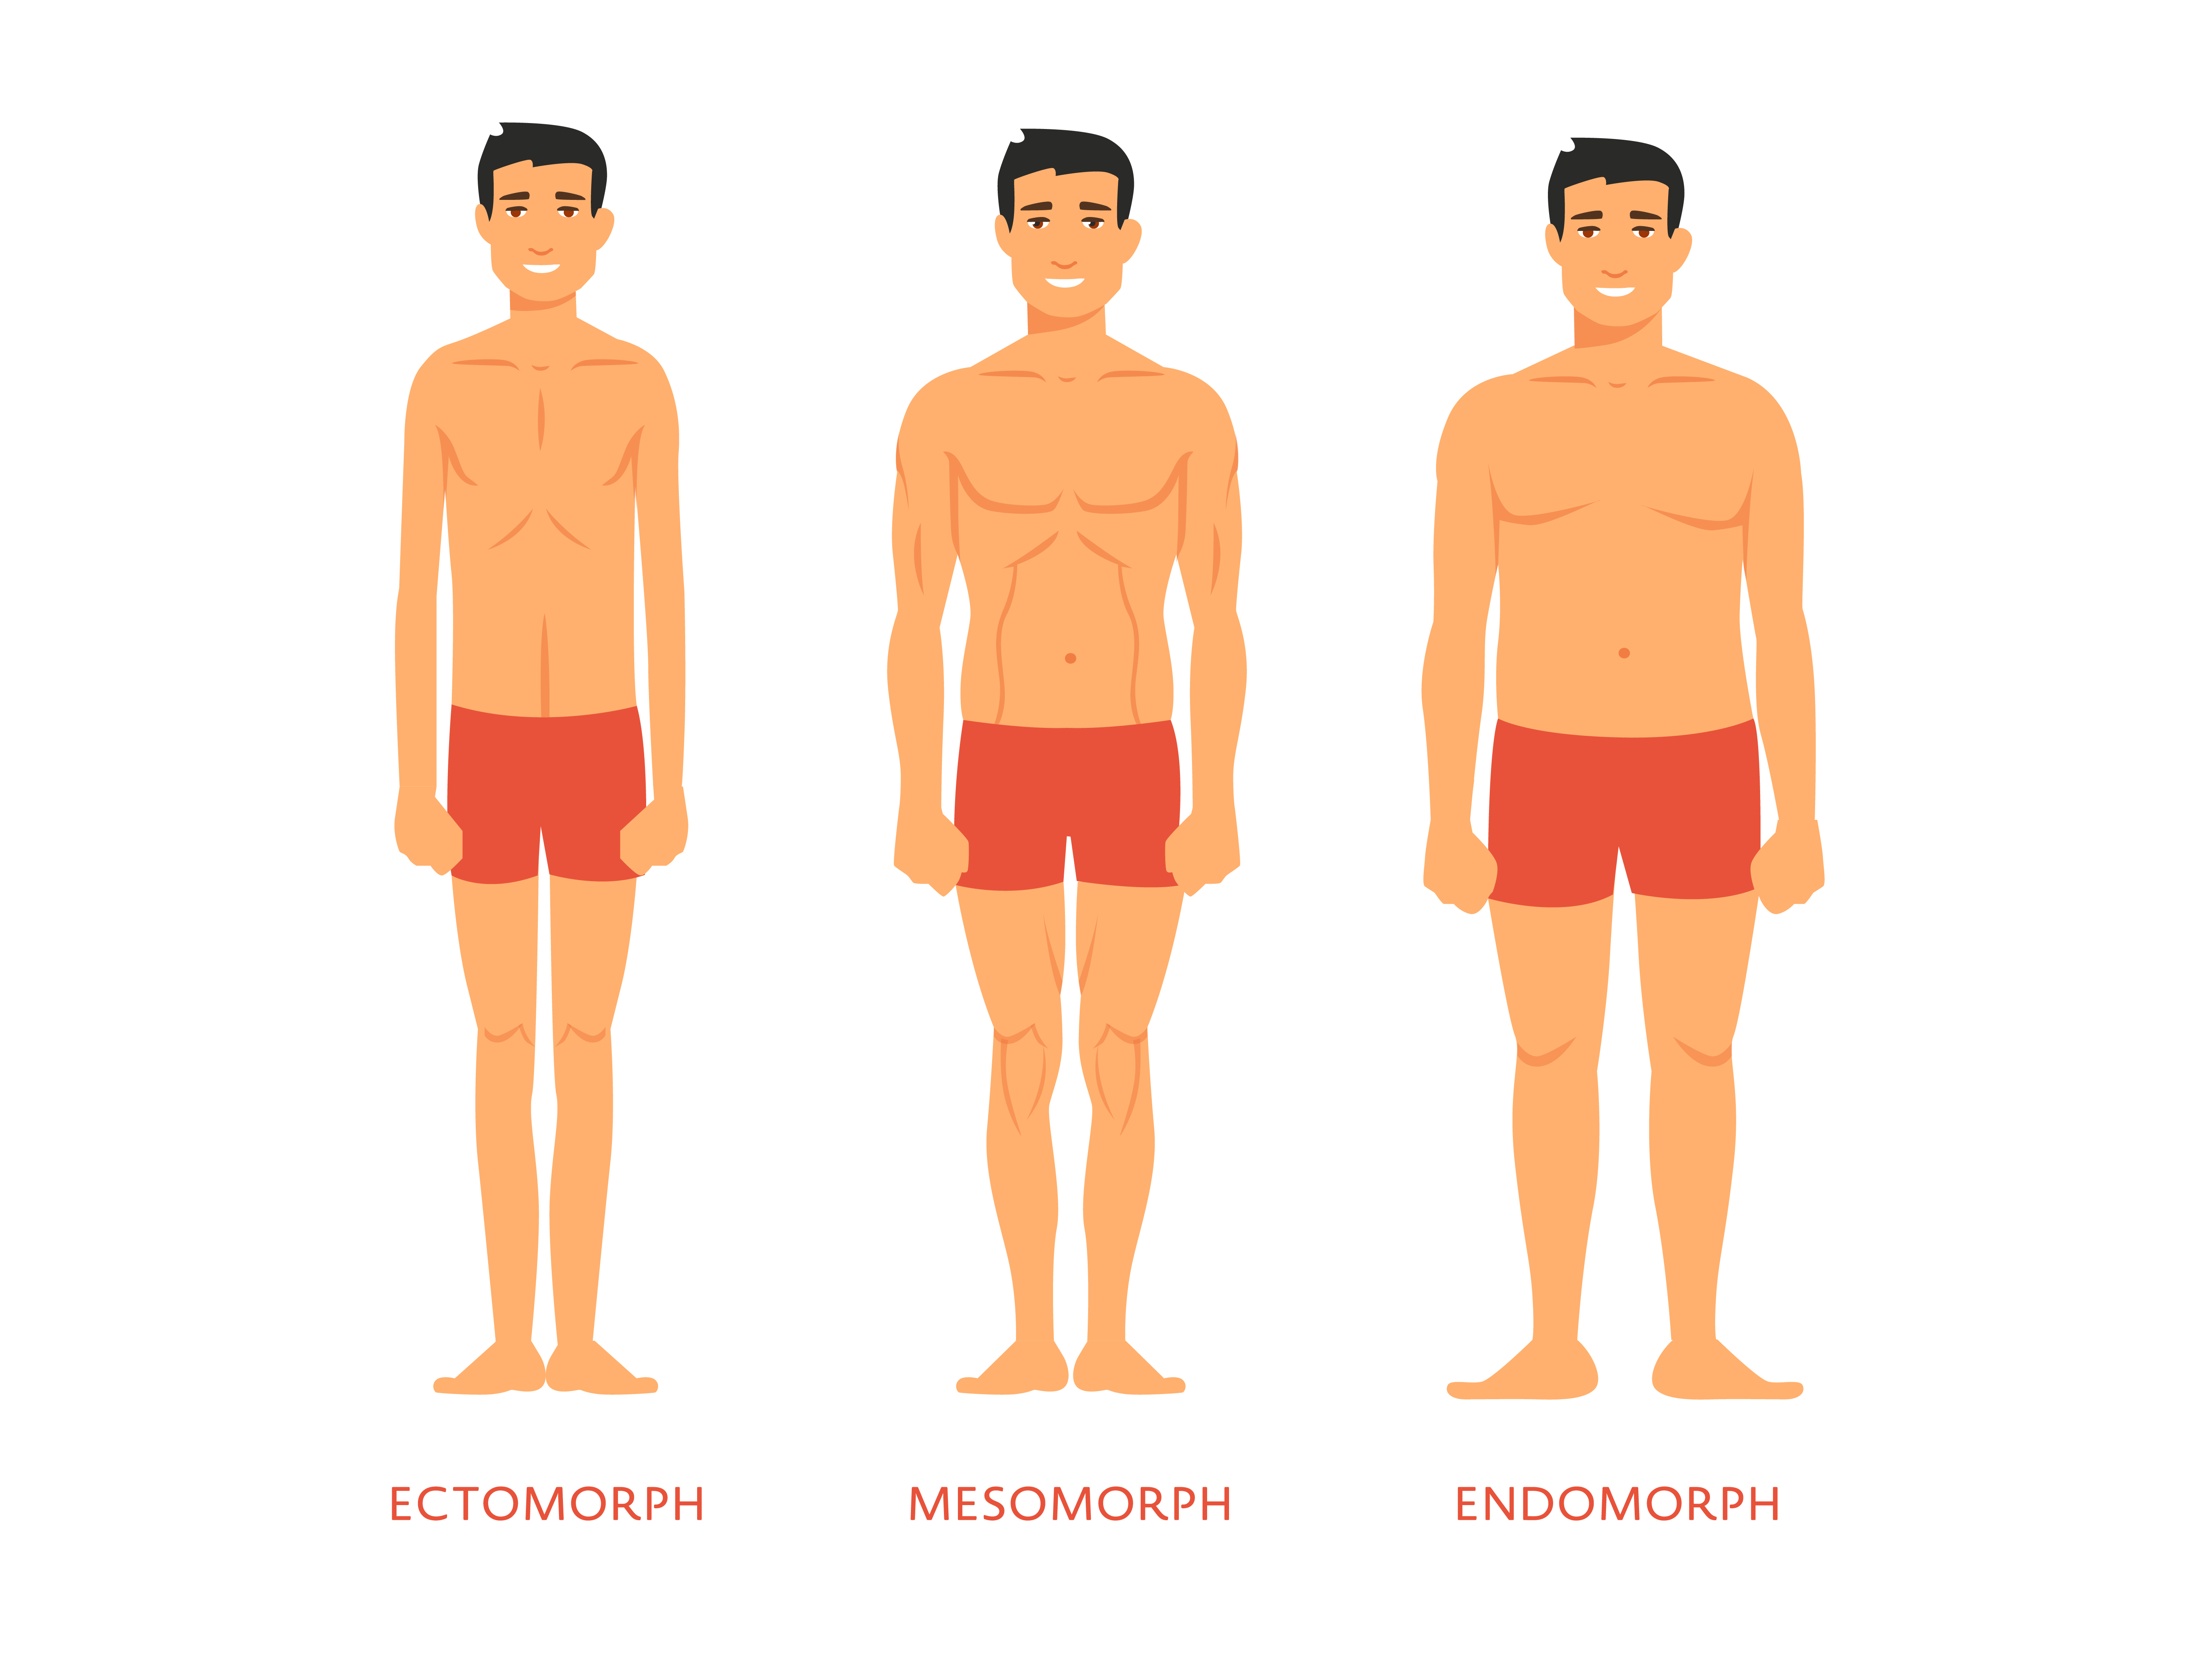 Body Type: 3 Body Types Defined. Endomorph, Ectomorph, and